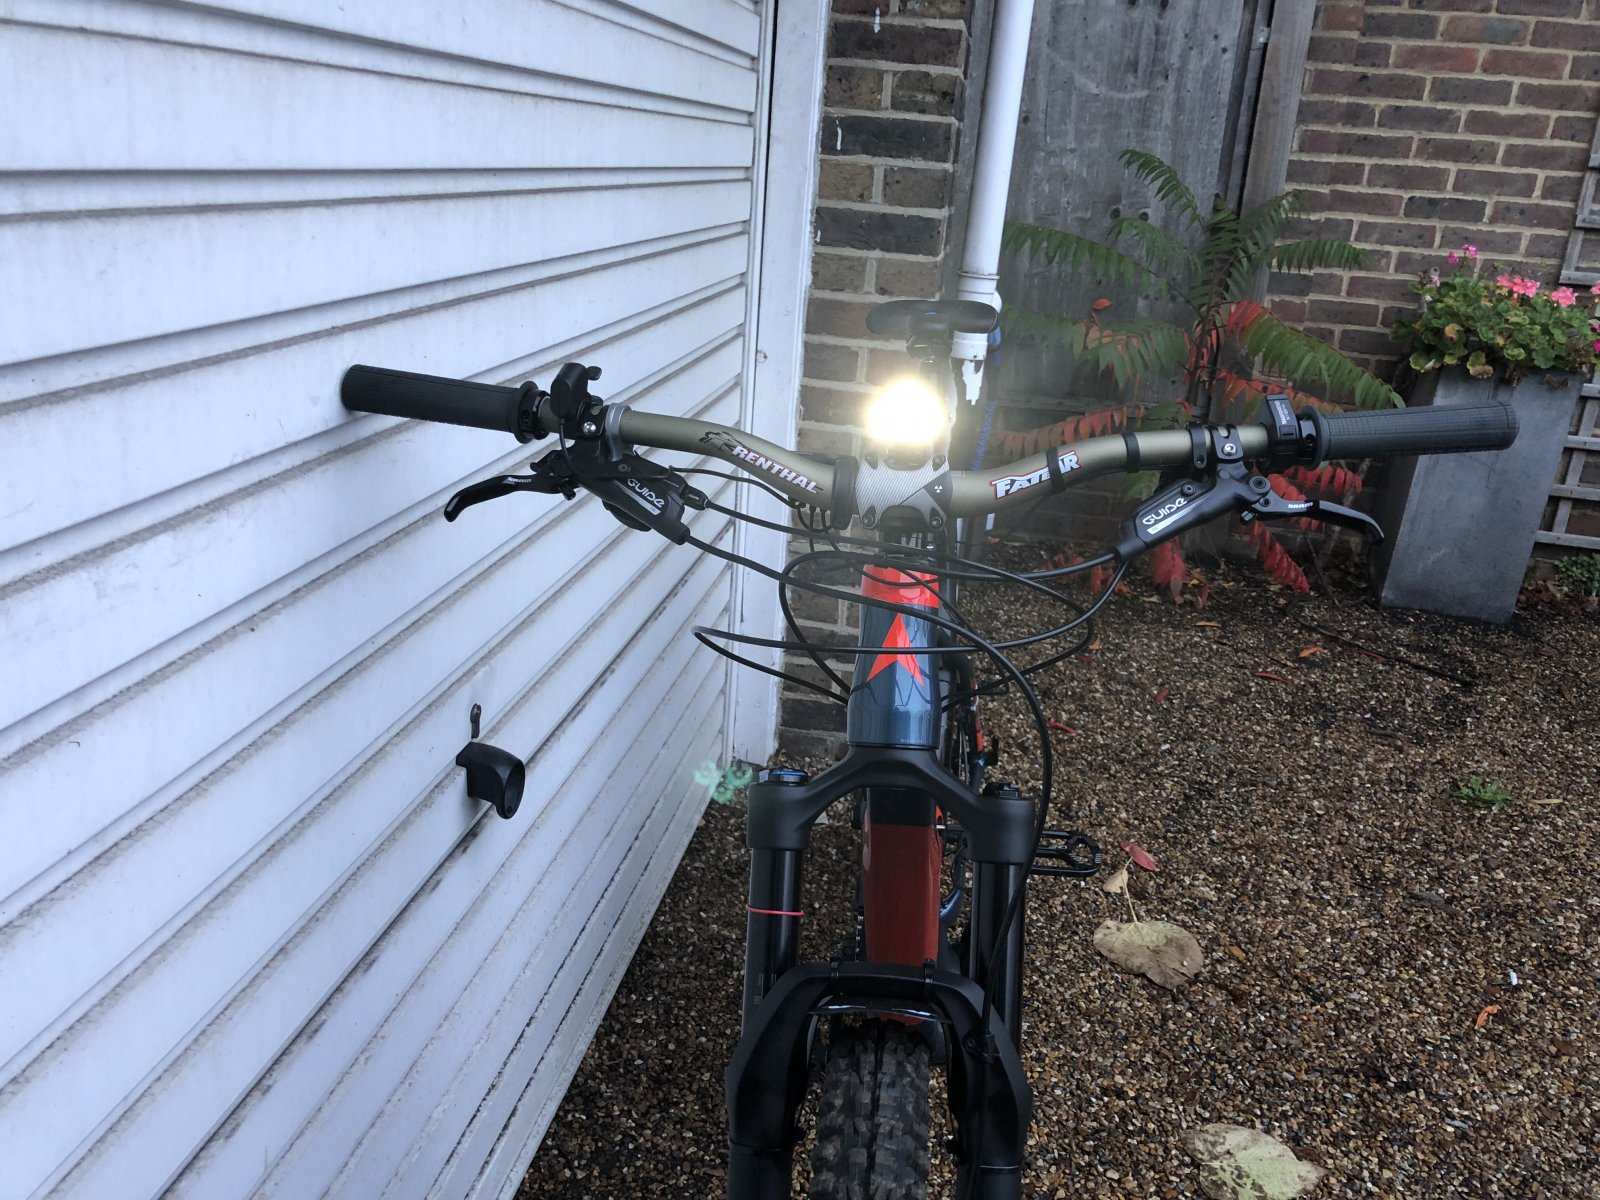 bikehut 1600 lumen front bike light